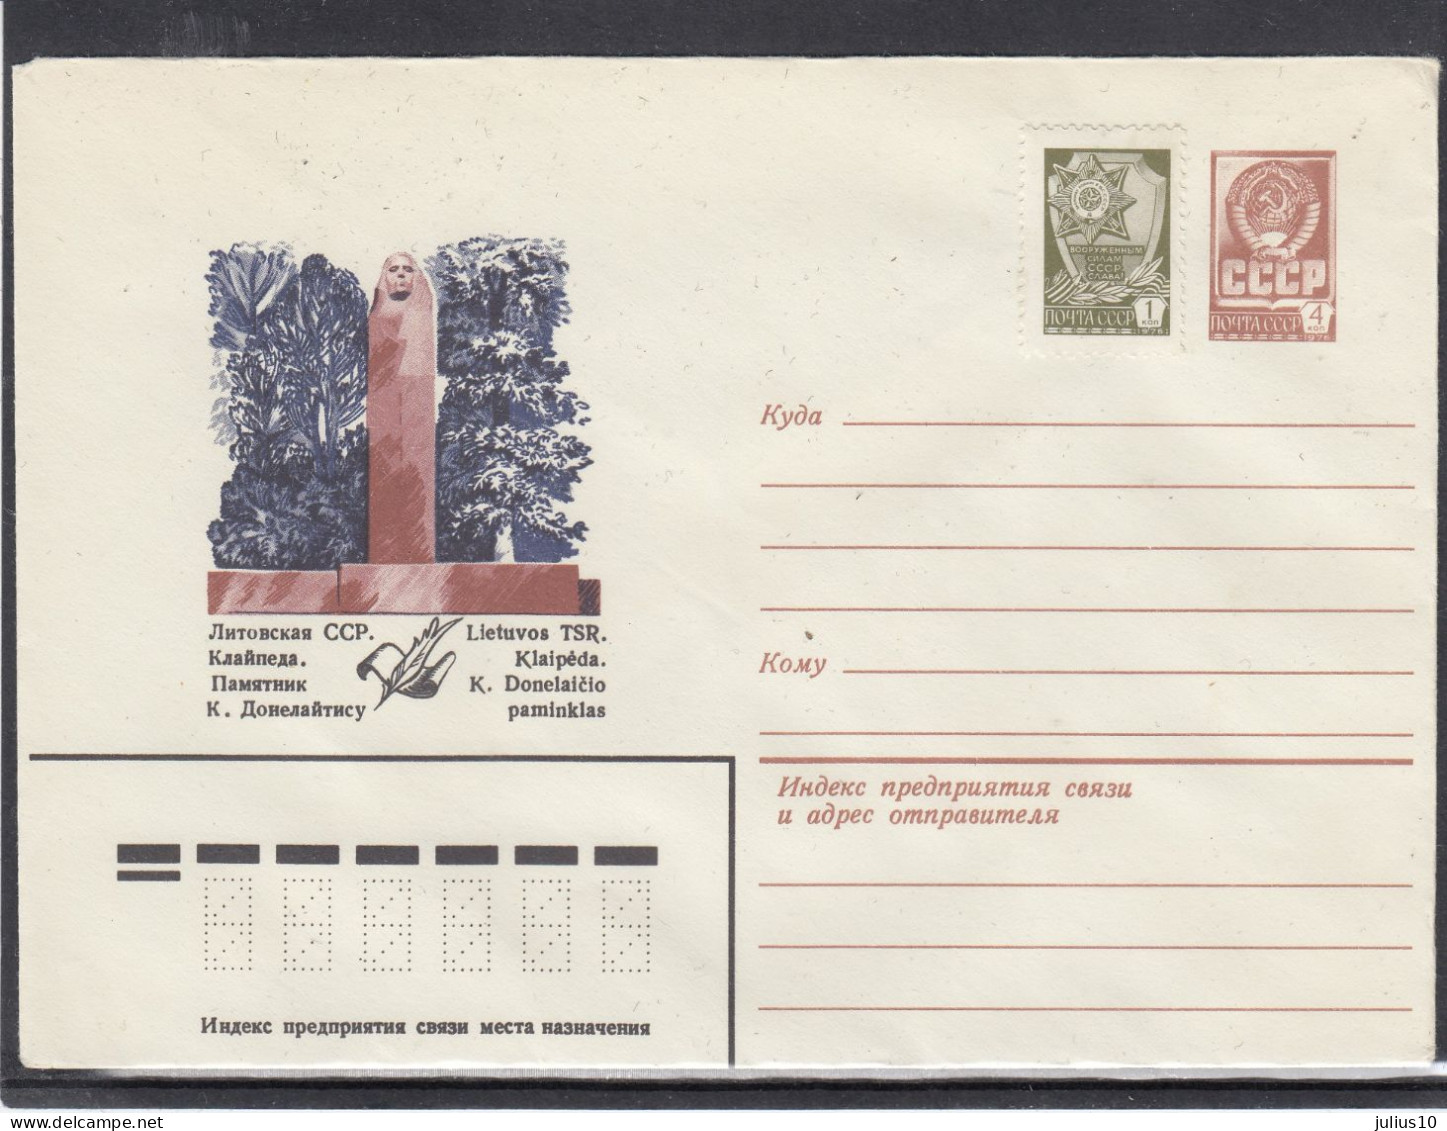 LITHUANIA (USSR) 1982 Cover Klaipeda Poet K.Donelaitis Monument #LTV131 - Litouwen